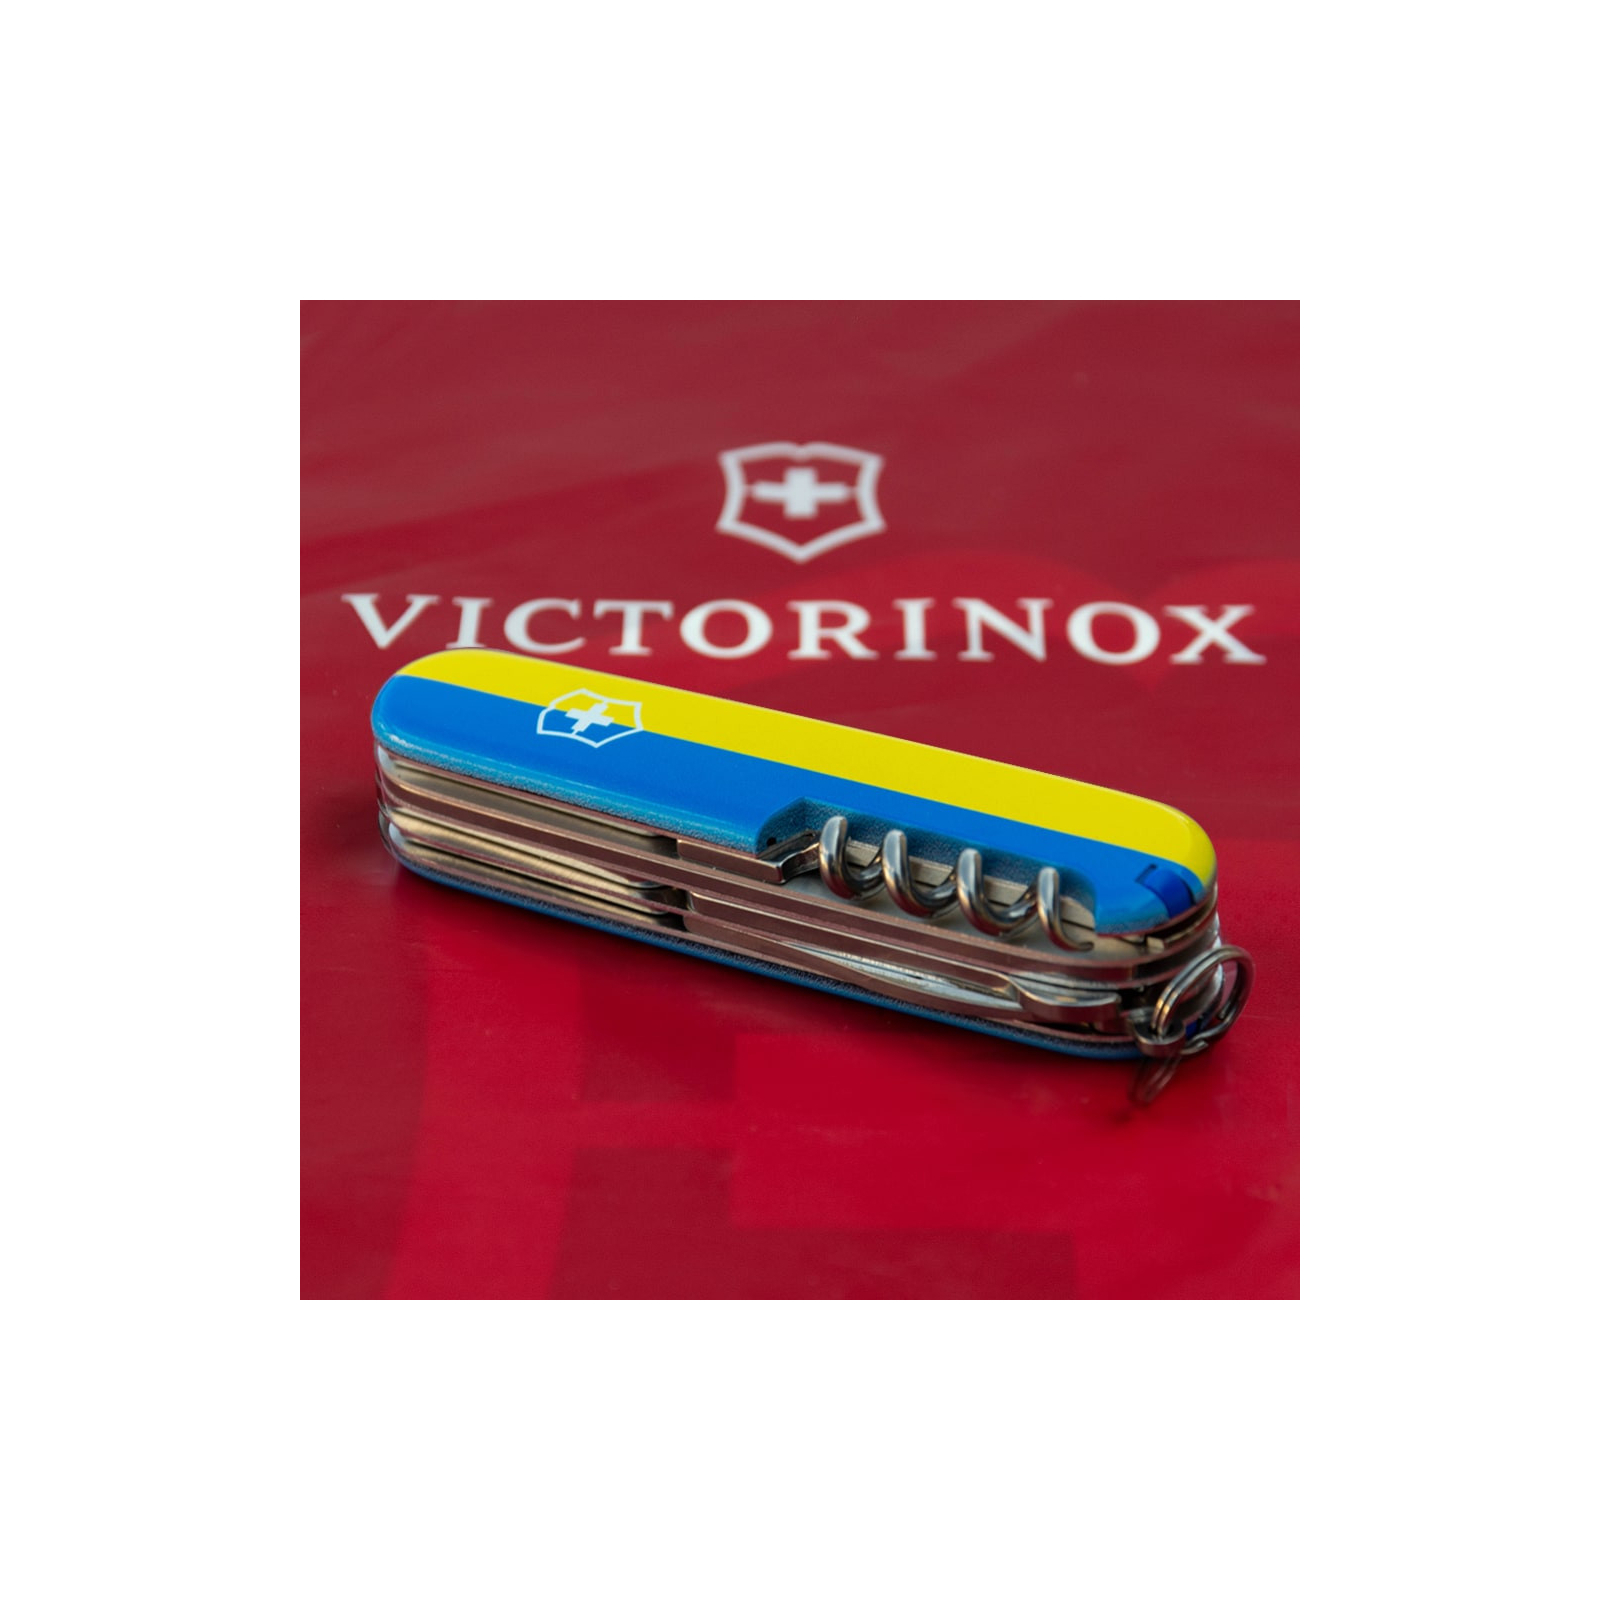 Нож Victorinox Huntsman Ukraine 91 мм Жовто-синій малюнок (1.3713.7_T3100p) изображение 4